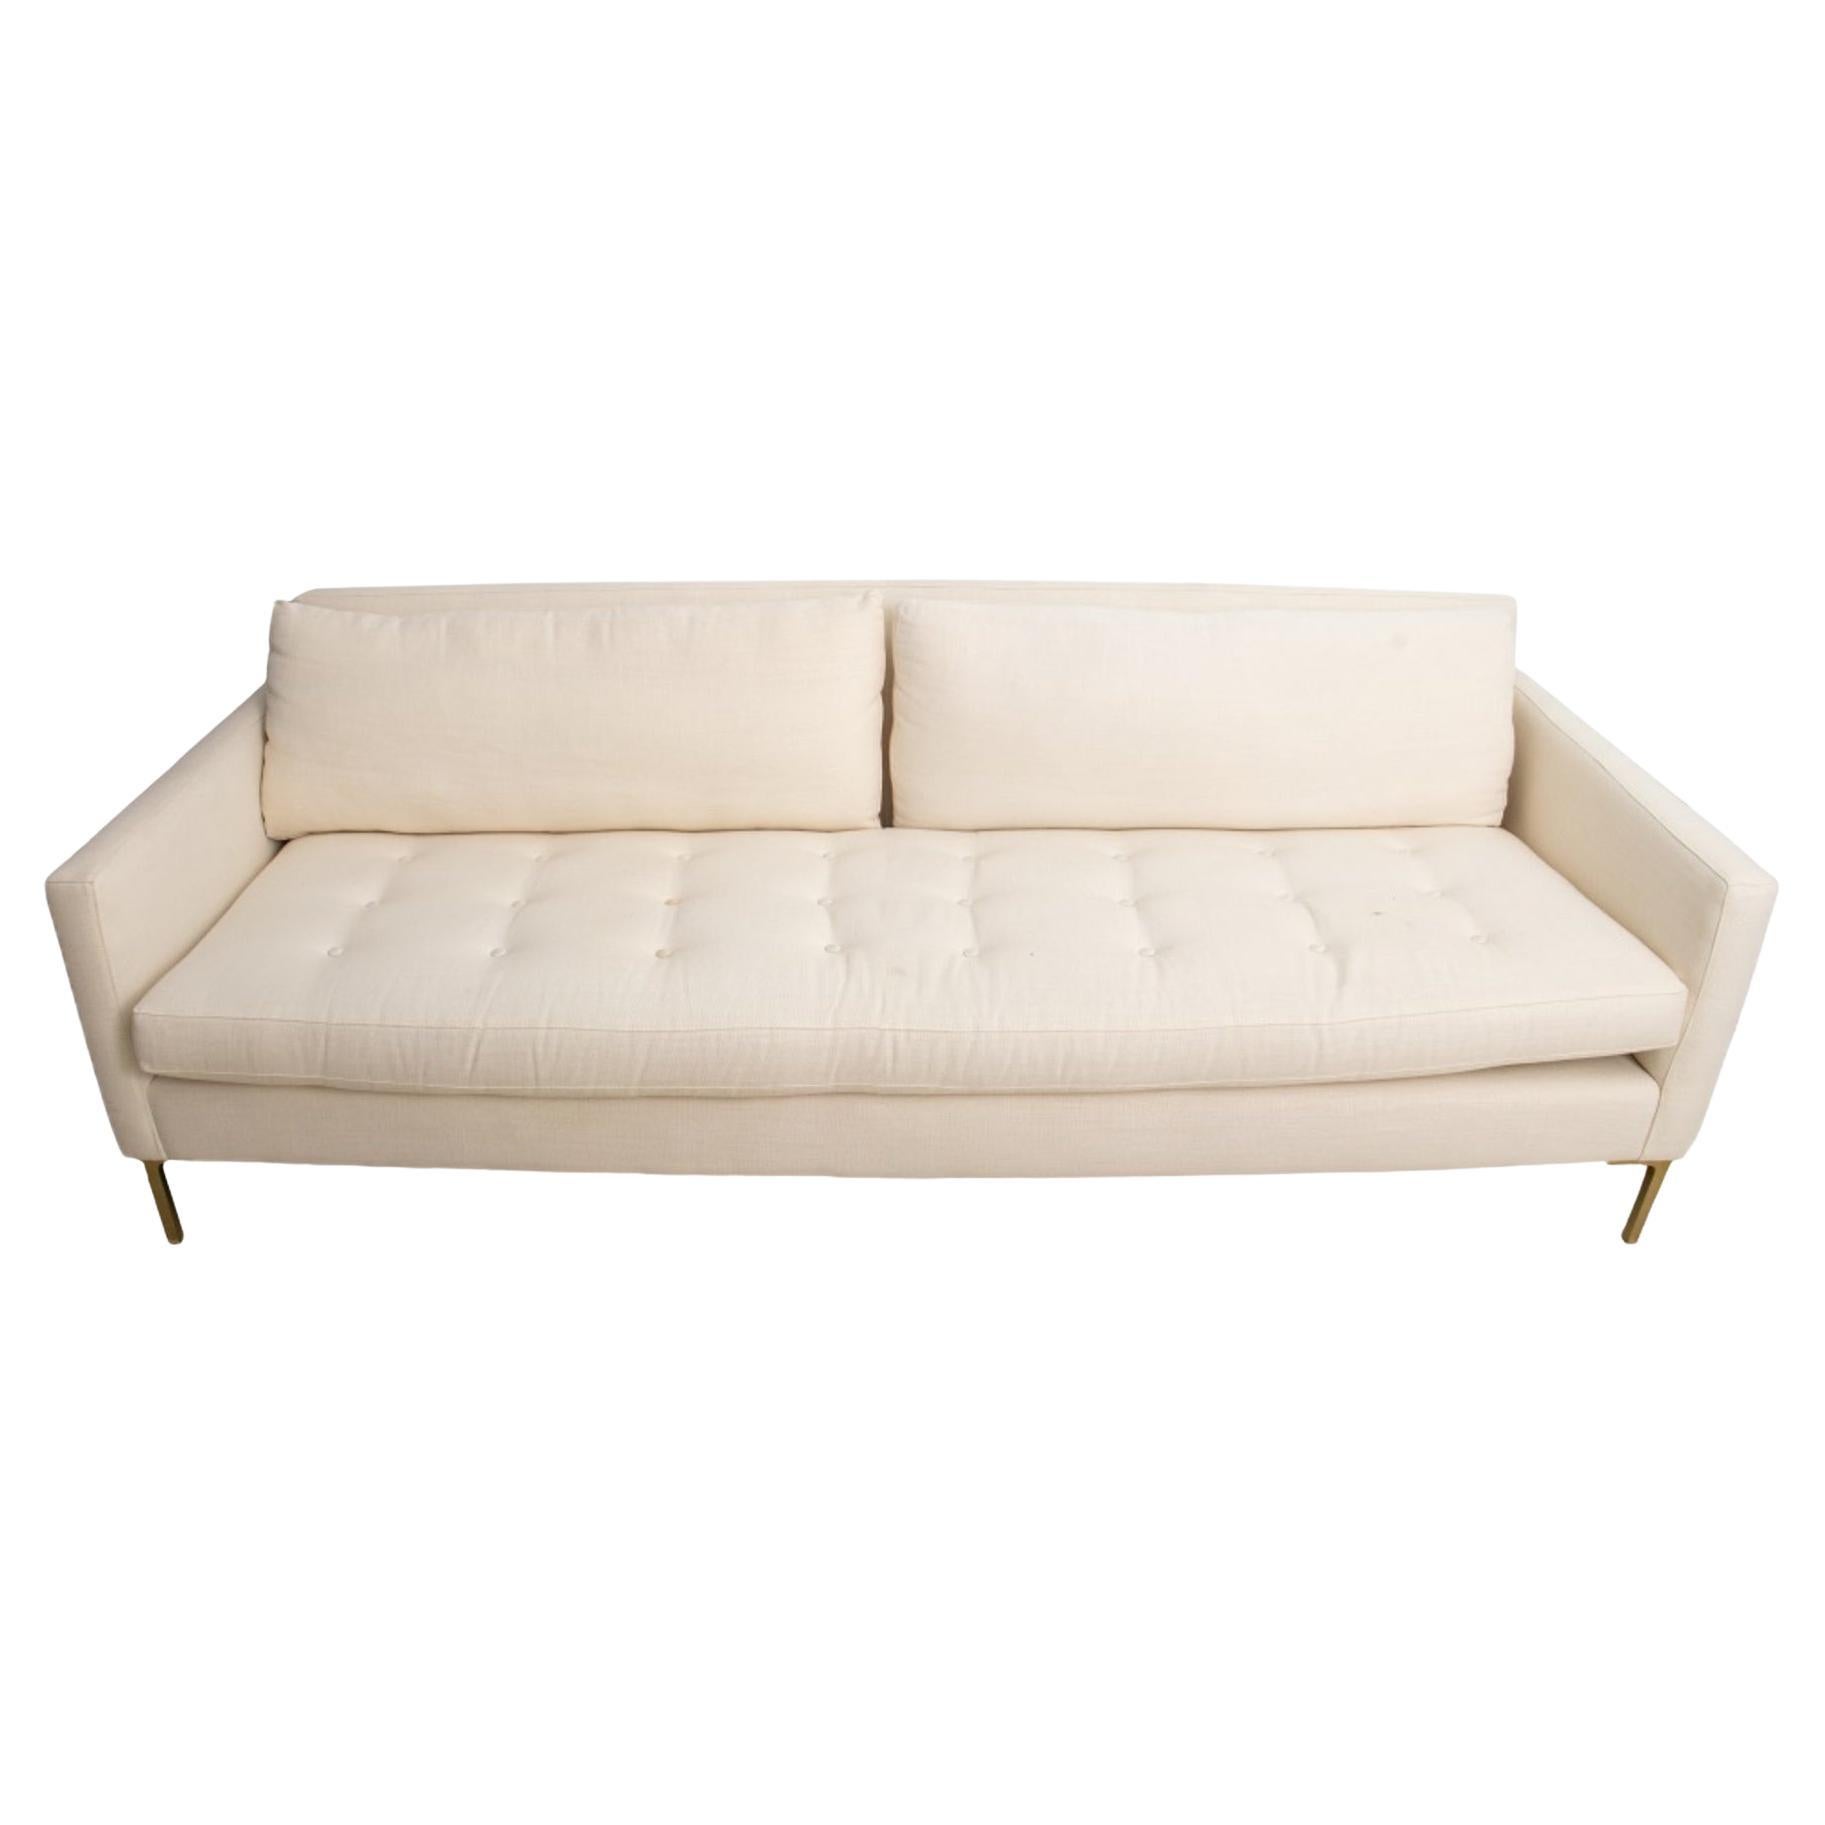 Knoll Mid-Century Modern Style Sofa For Sale